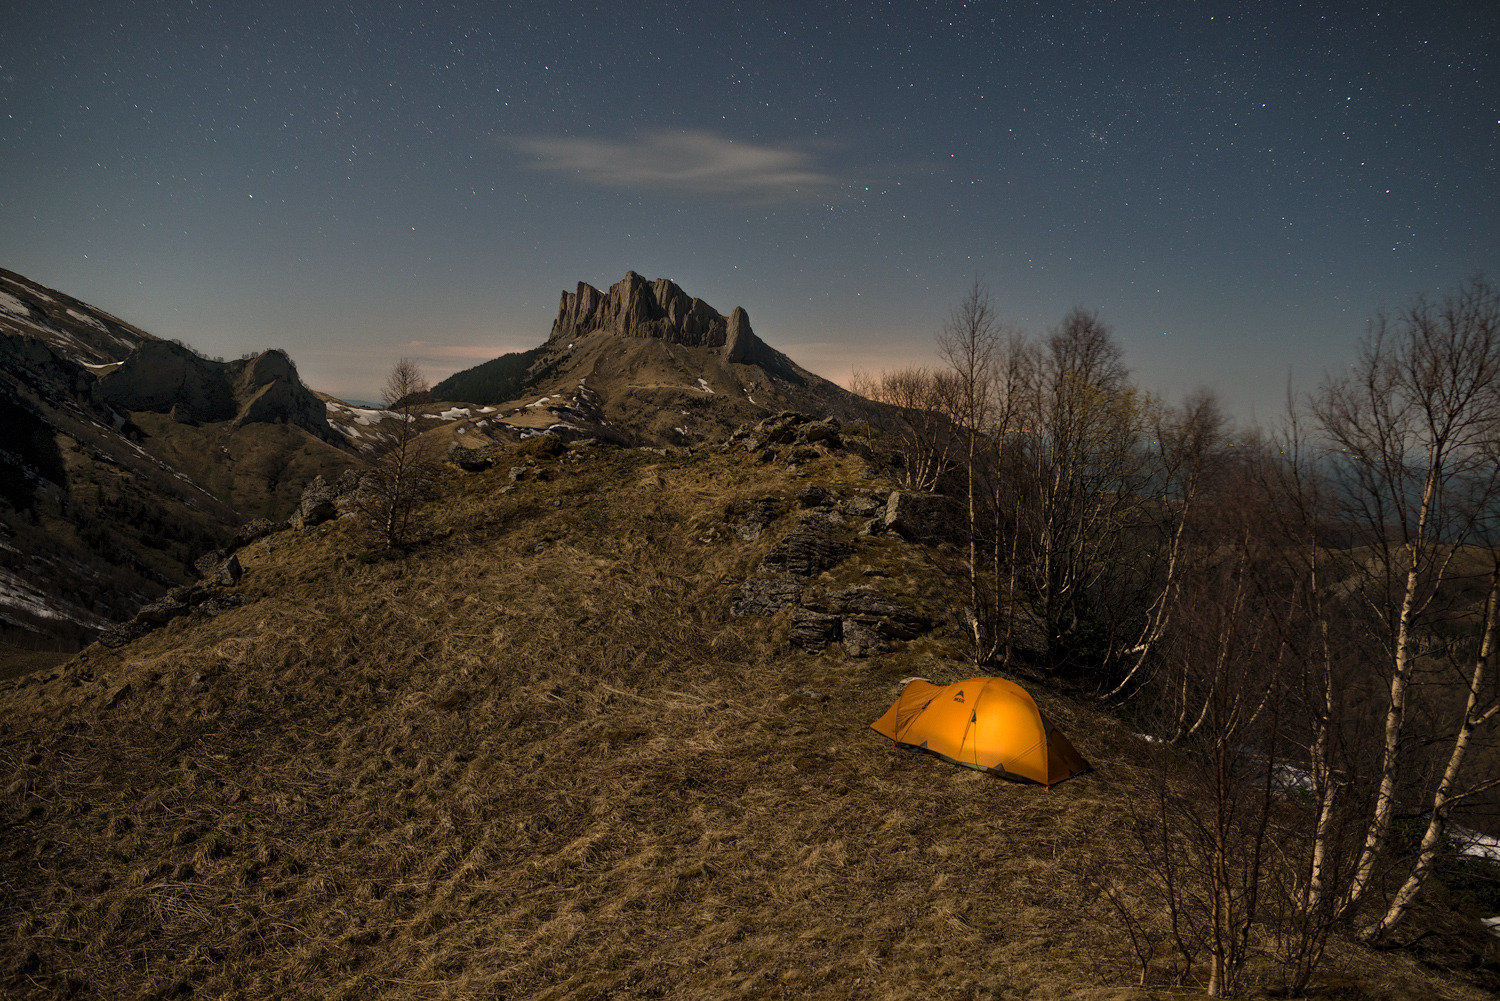 Про палатку в ночи и облачко над горой | Фотограф Александр Плеханов | foto.by фото.бай